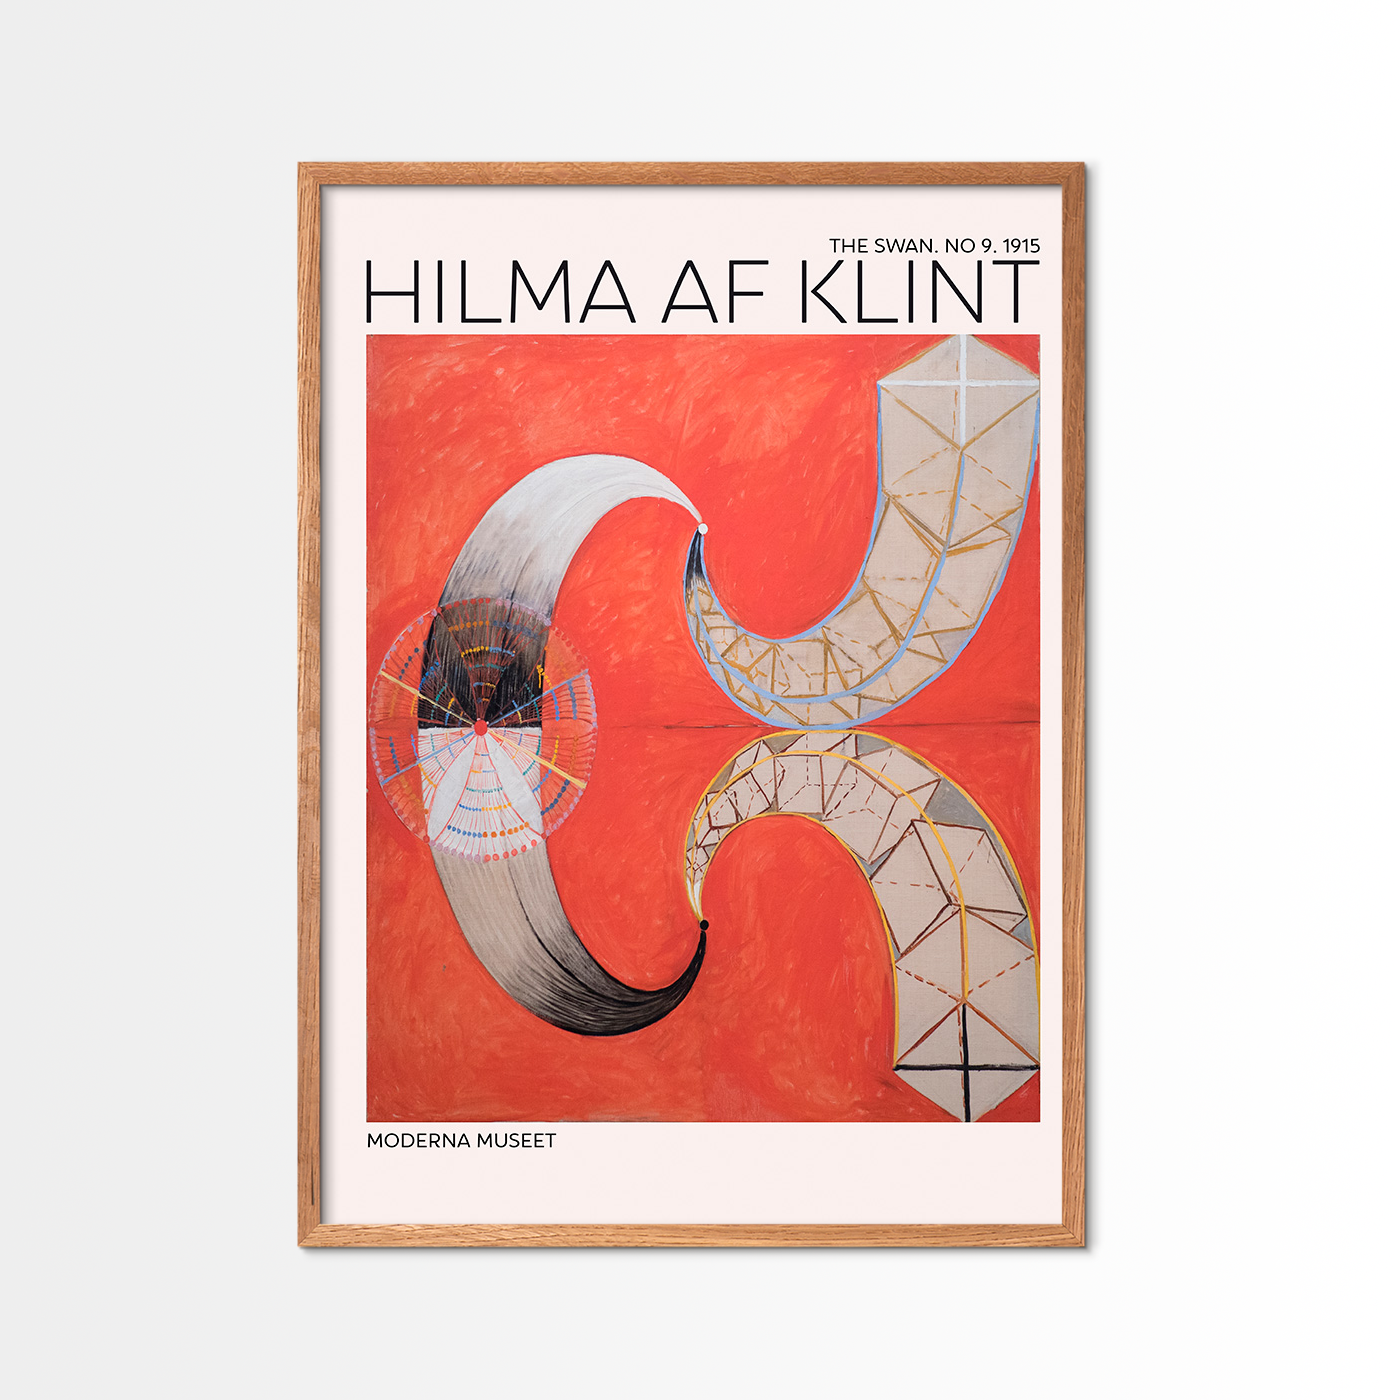 The Swan No. 9 - Hilma Of Klint